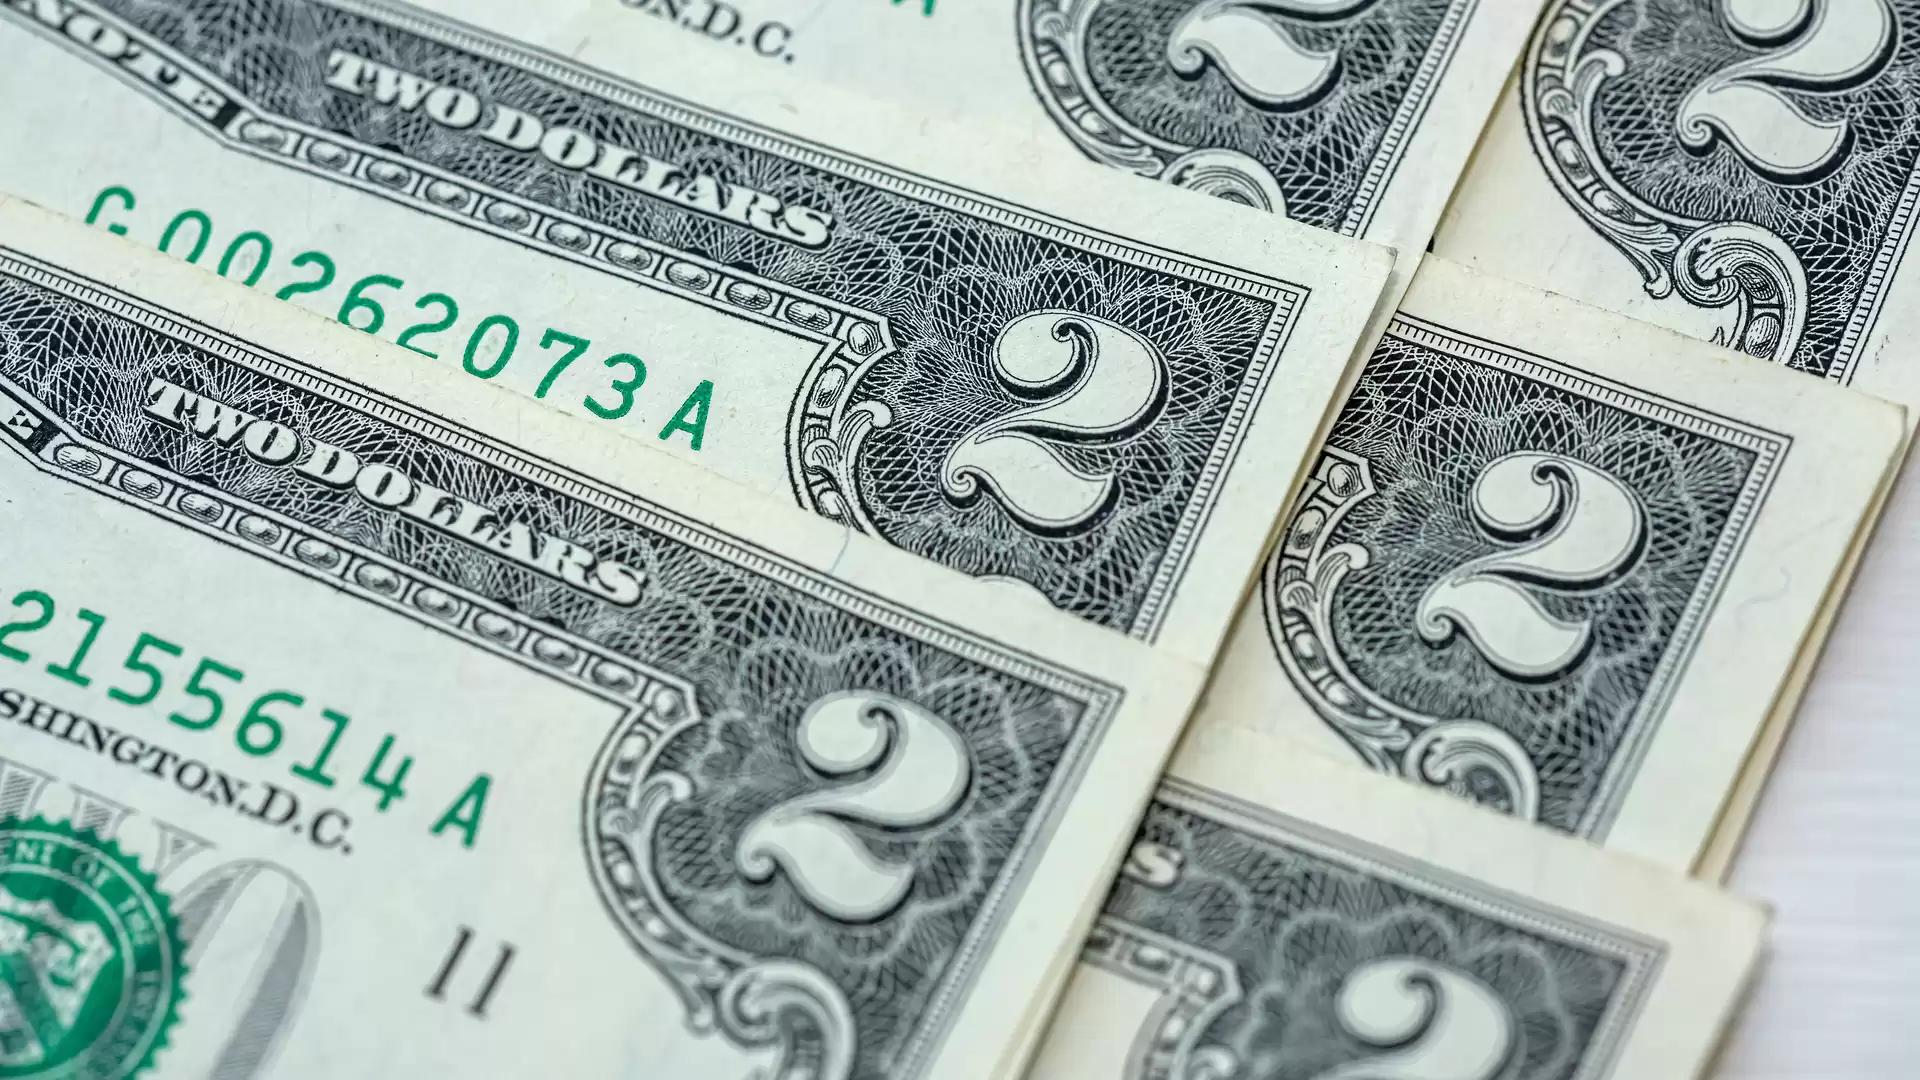 Should You Spend $2 Dollar Bills?